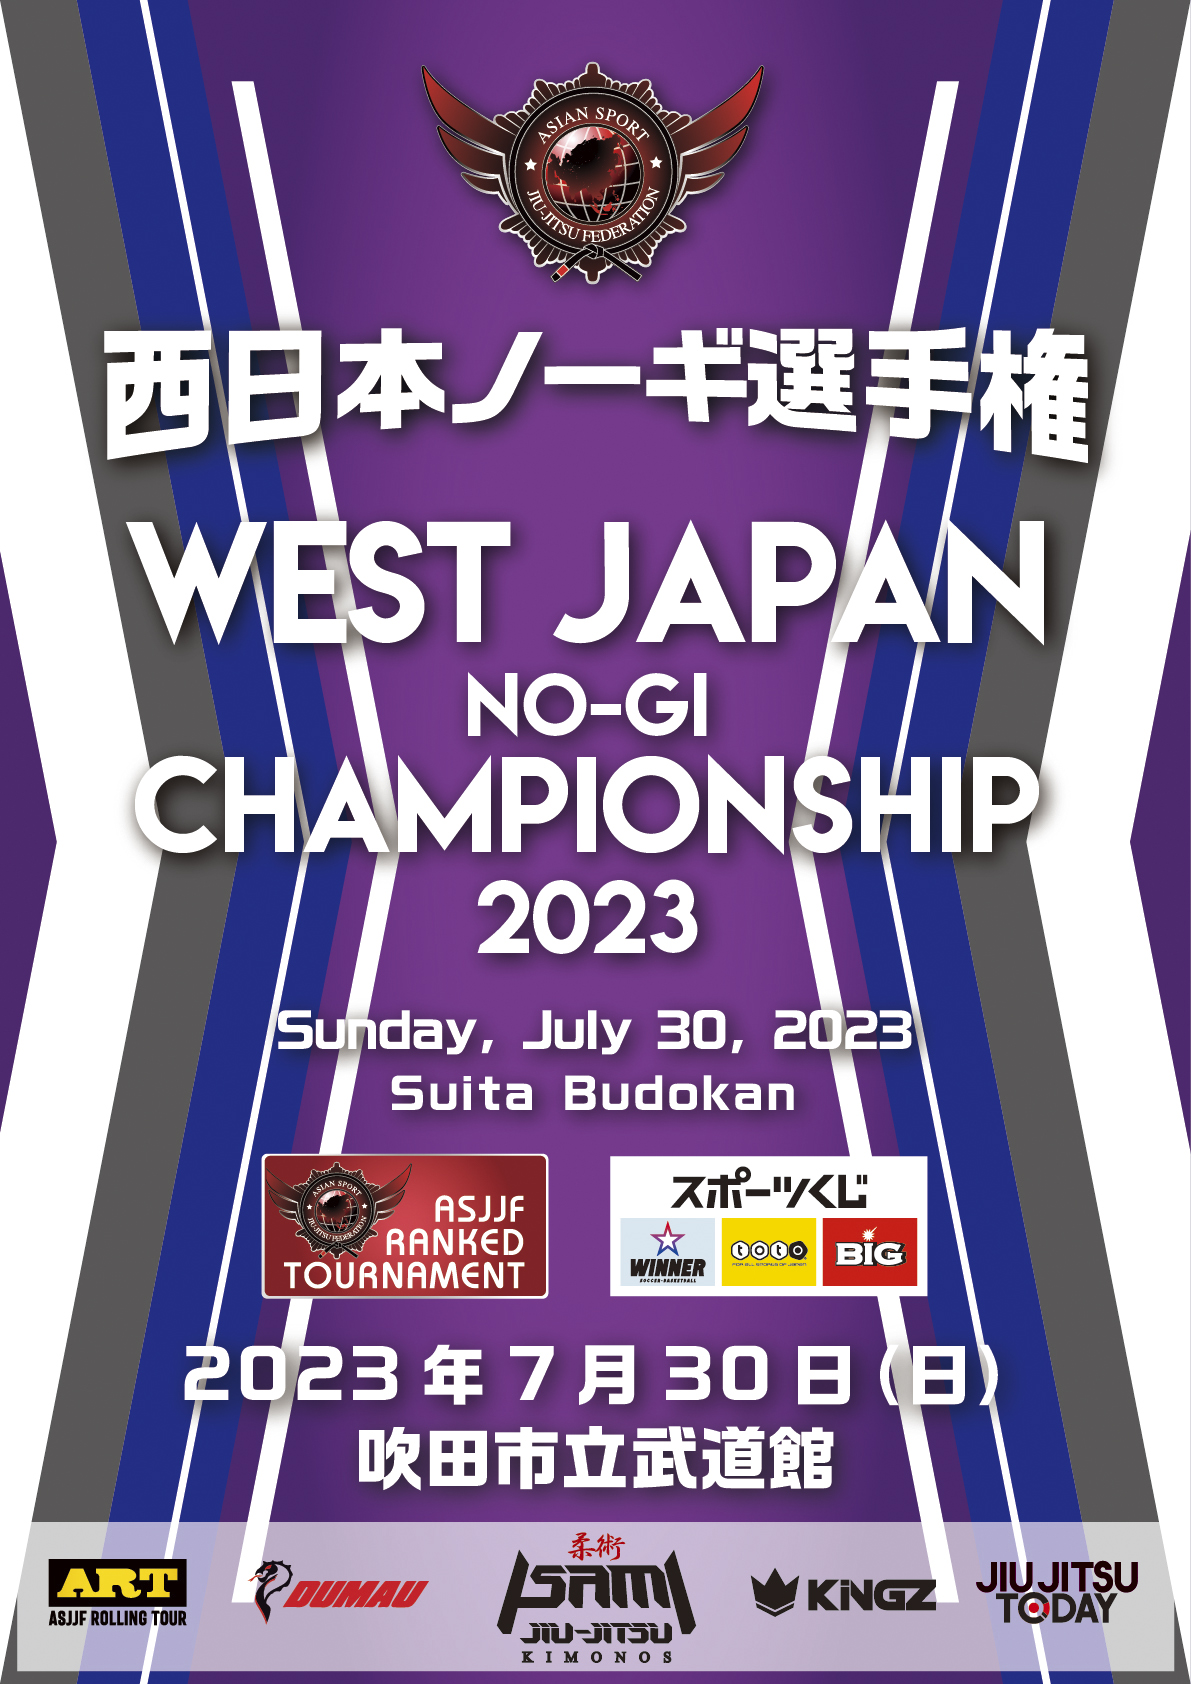 west japan no-gi championship 2023